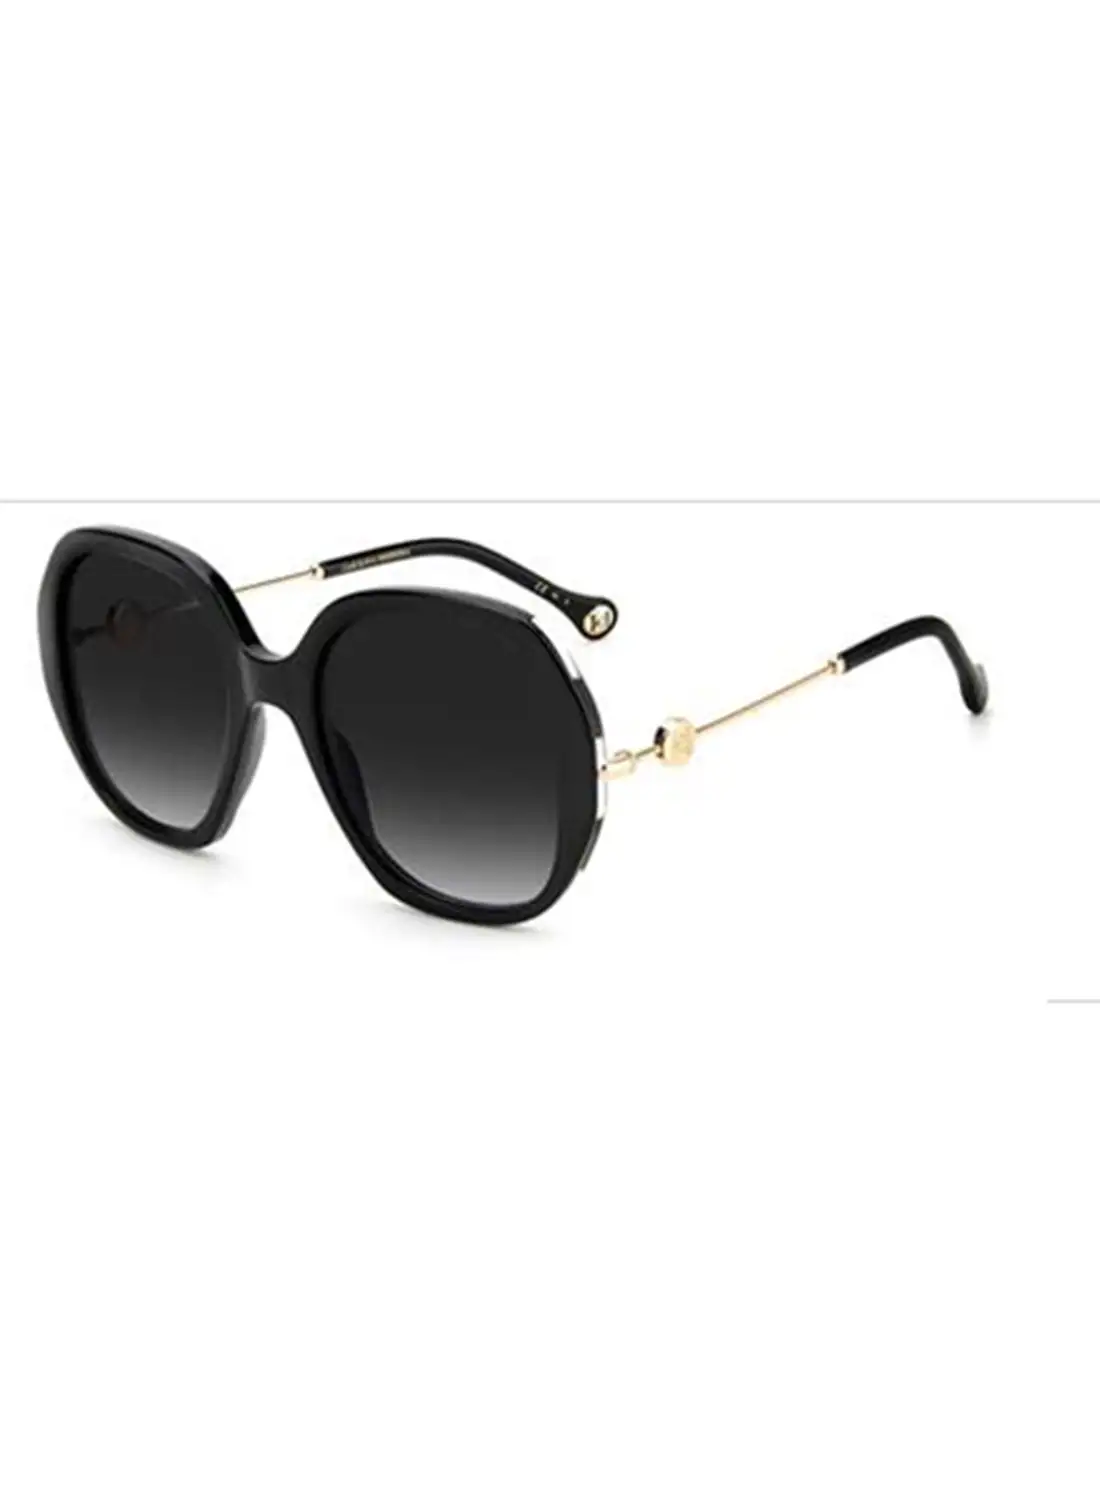 CAROLINA HERRERA Women's UV Protection Square Sunglasses - Ch 0019/S Black 21 - Lens Size: 56.9 Mm